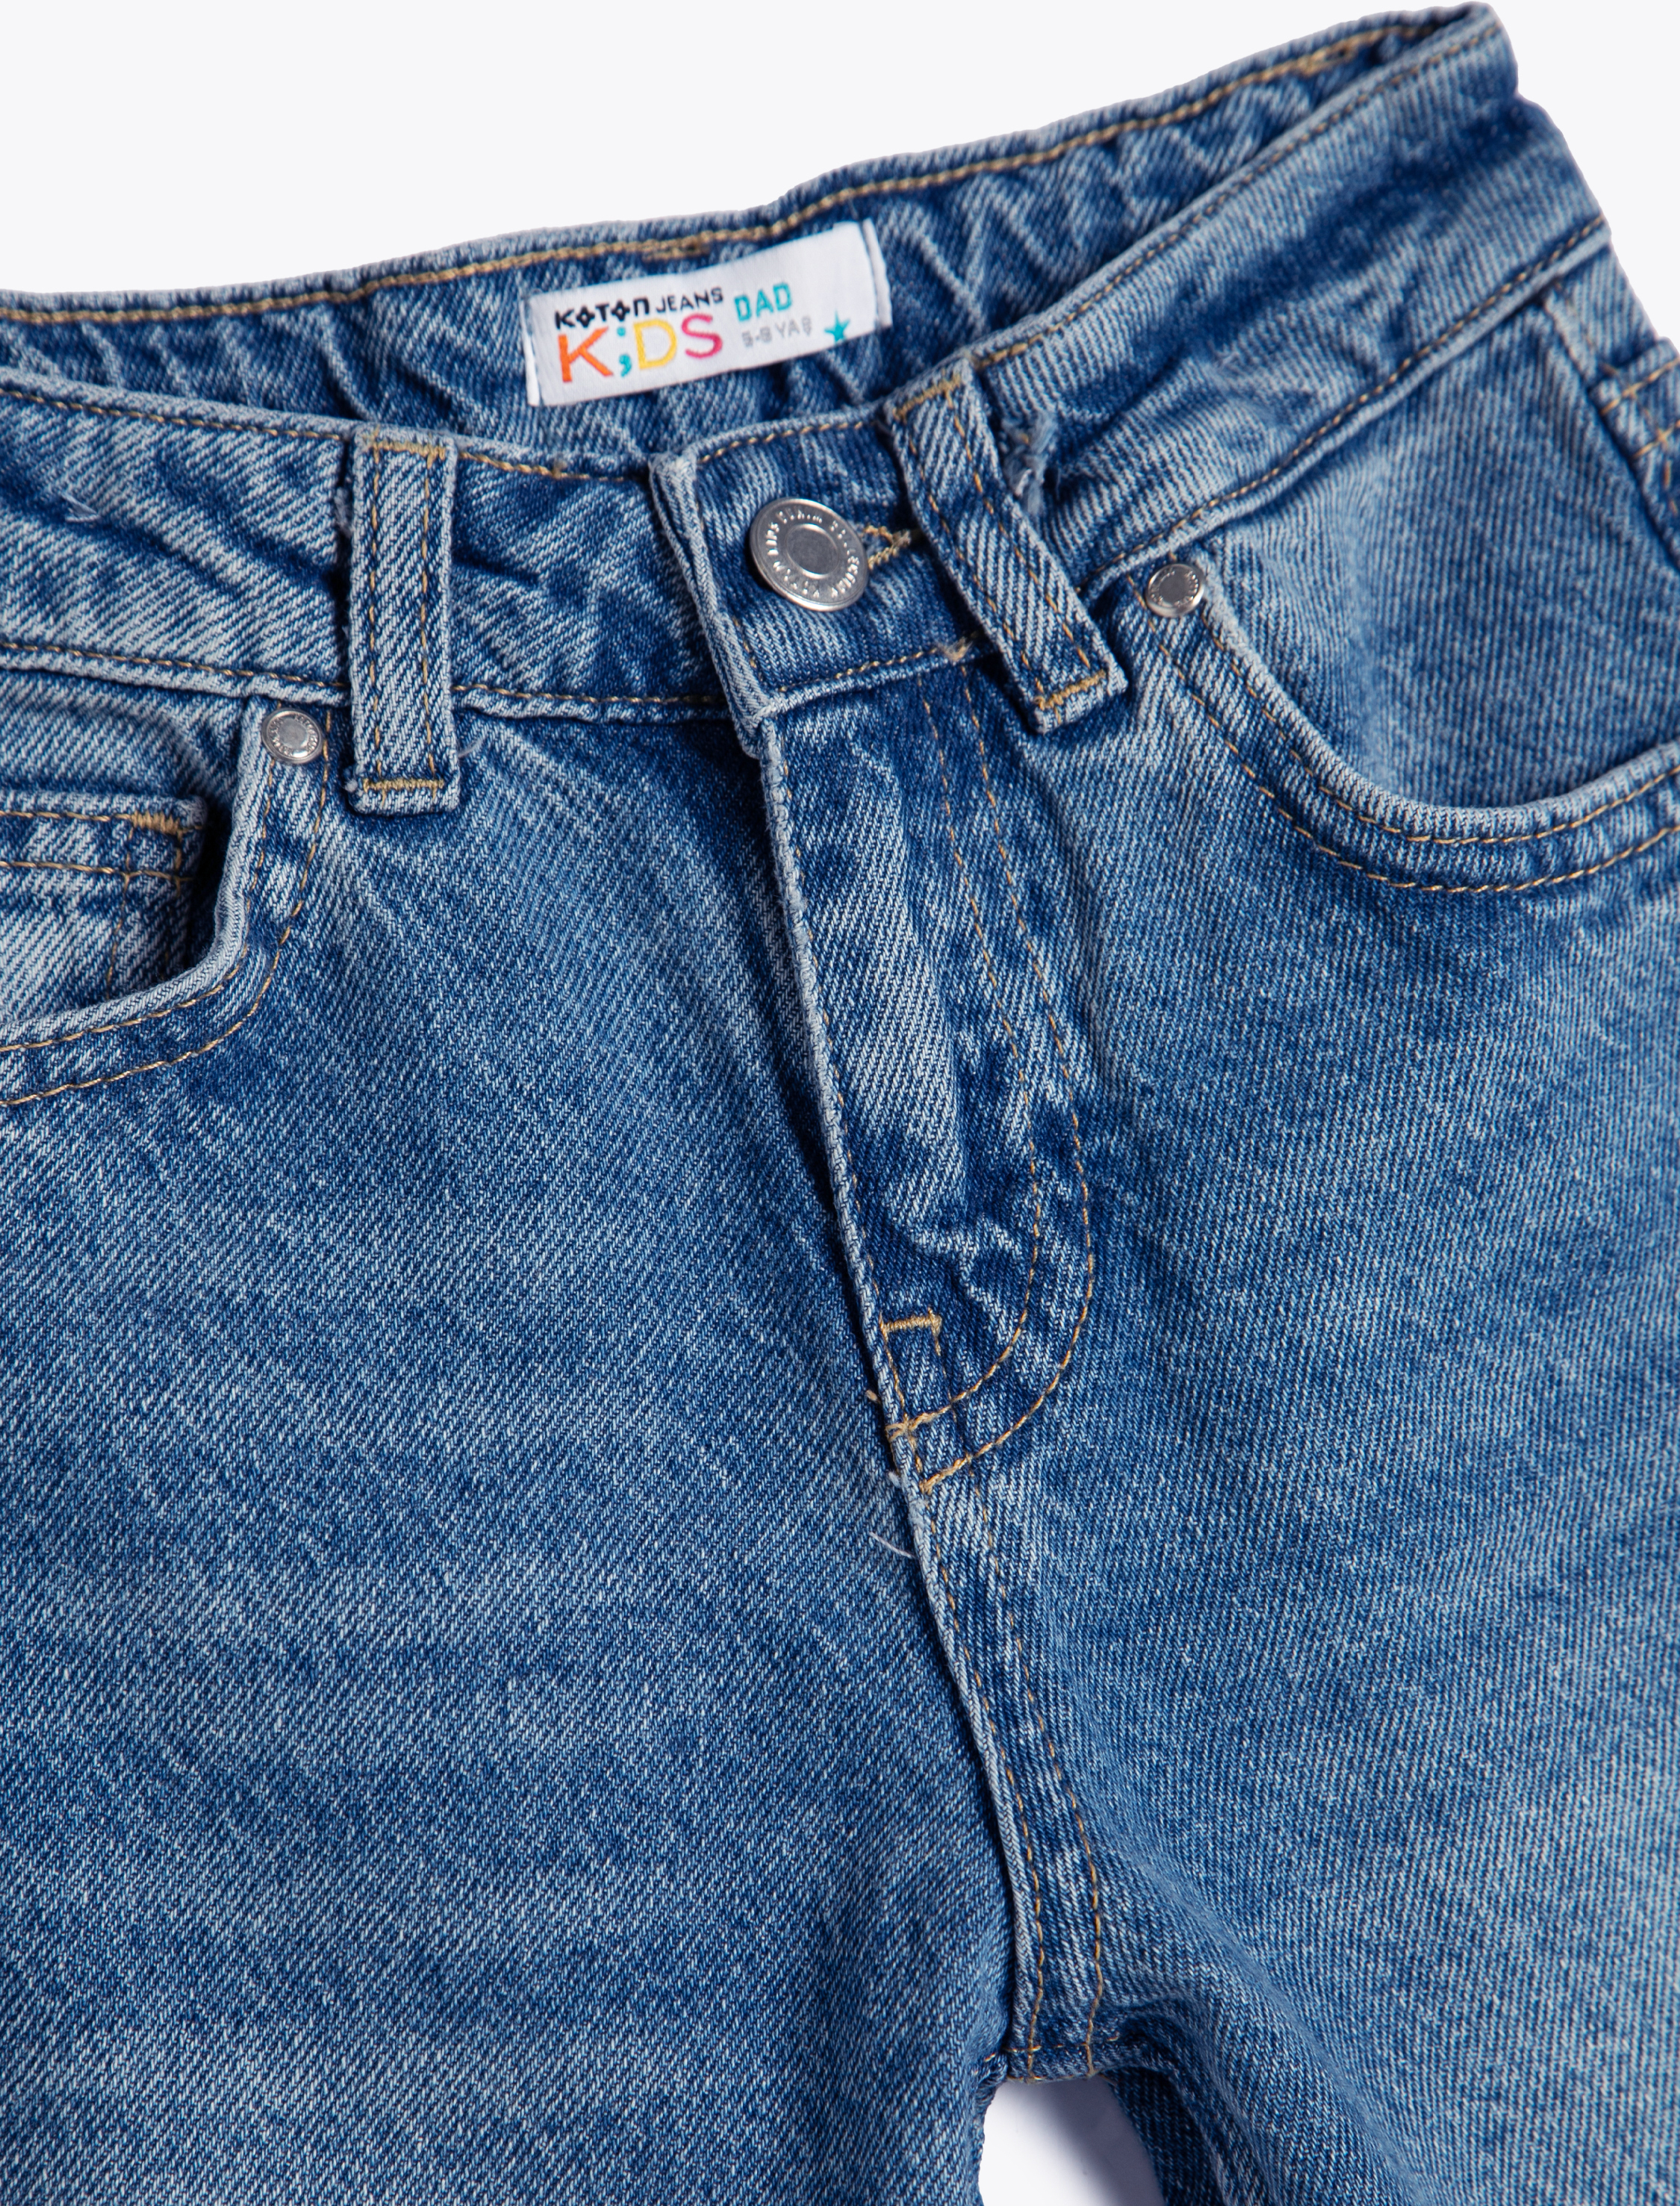 Koton Kot Pantolon Beli Ayarlanabilir Lastikli Cepli Pamuklu. 5